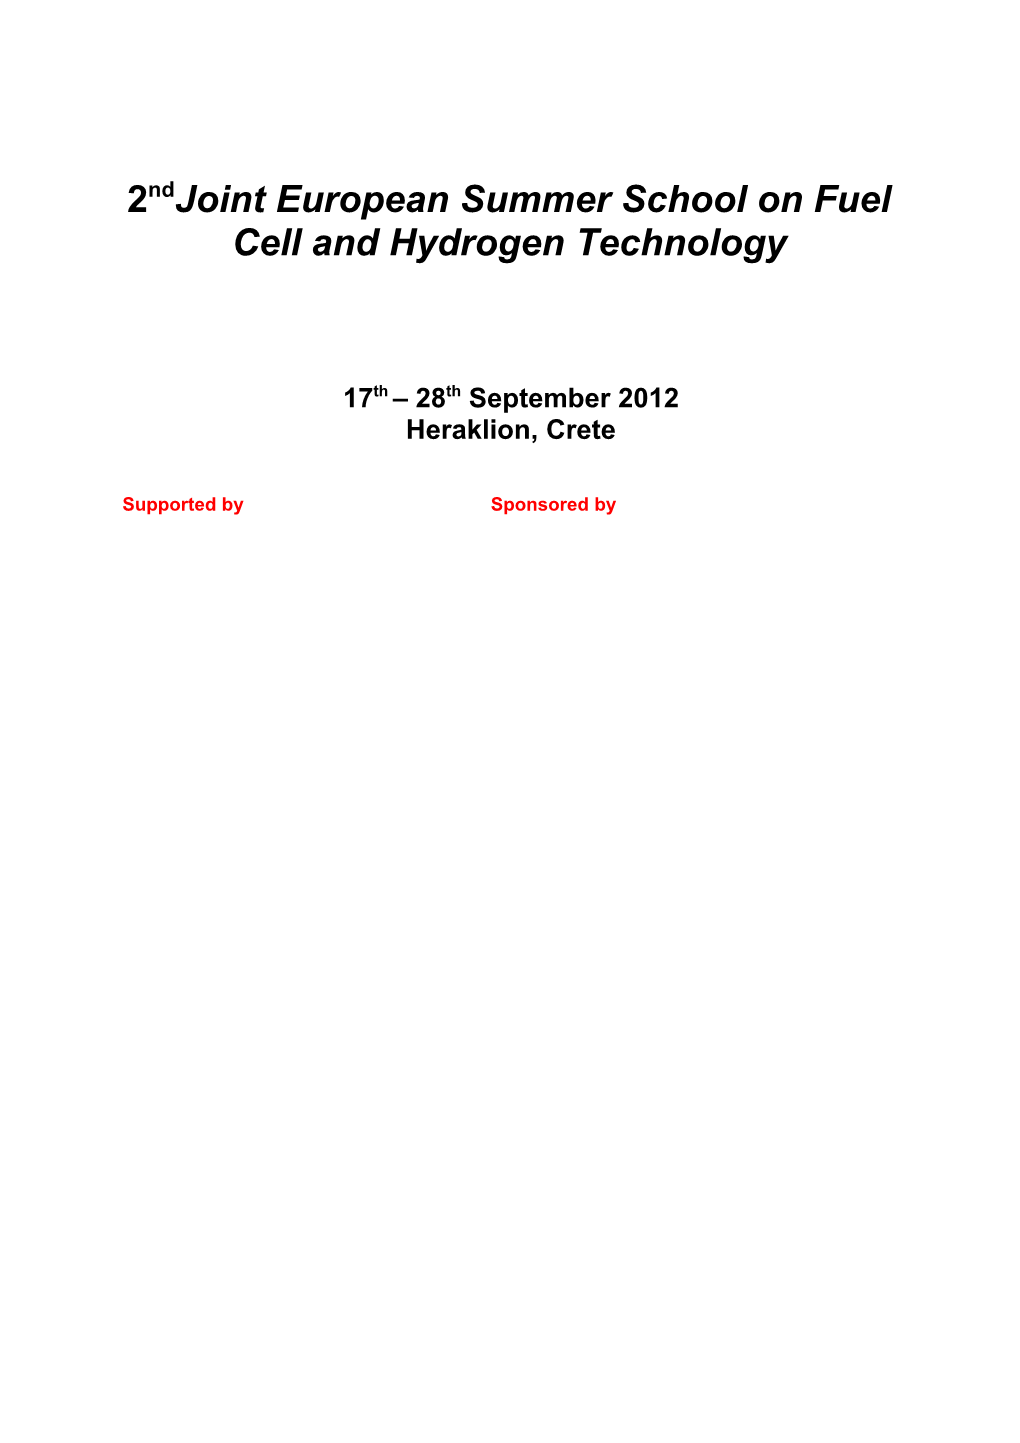 2Ndjoint European Summer School on Fuel Cell and Hydrogen Technology